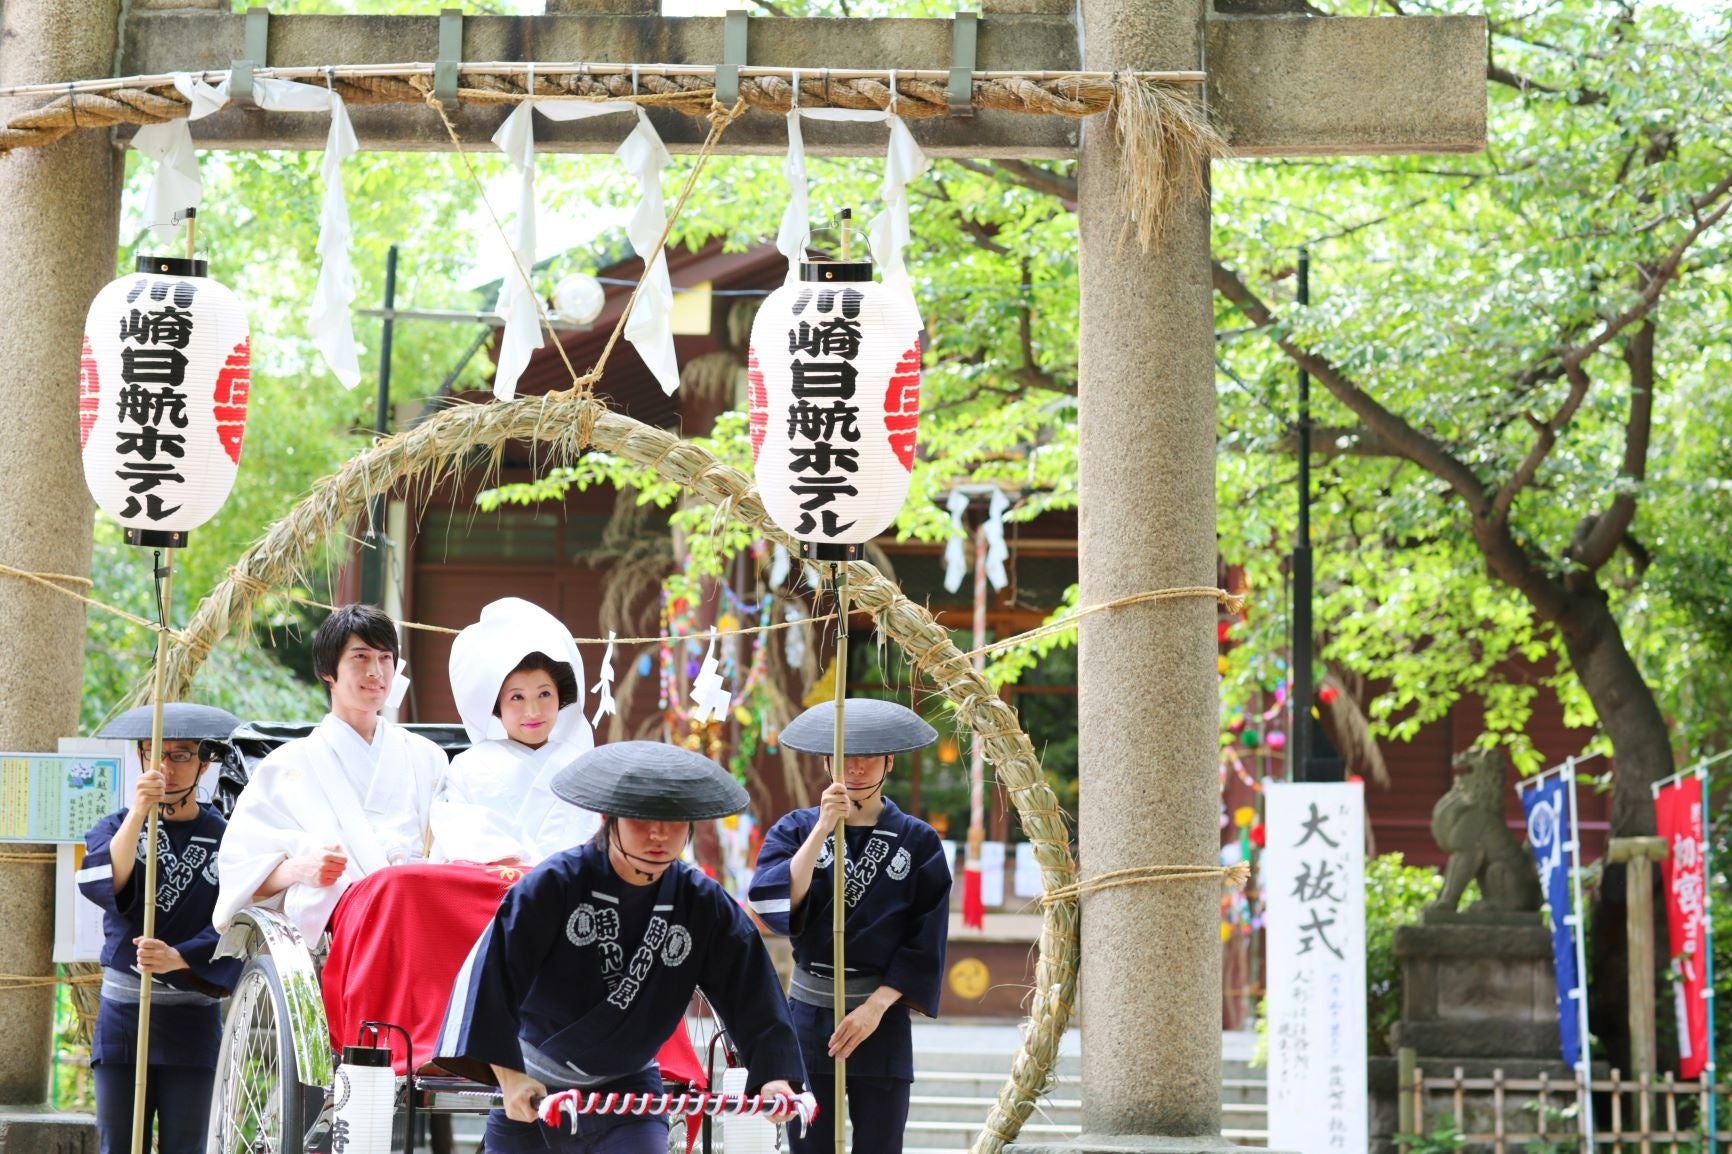 「川崎稲毛神社」での挙式風景